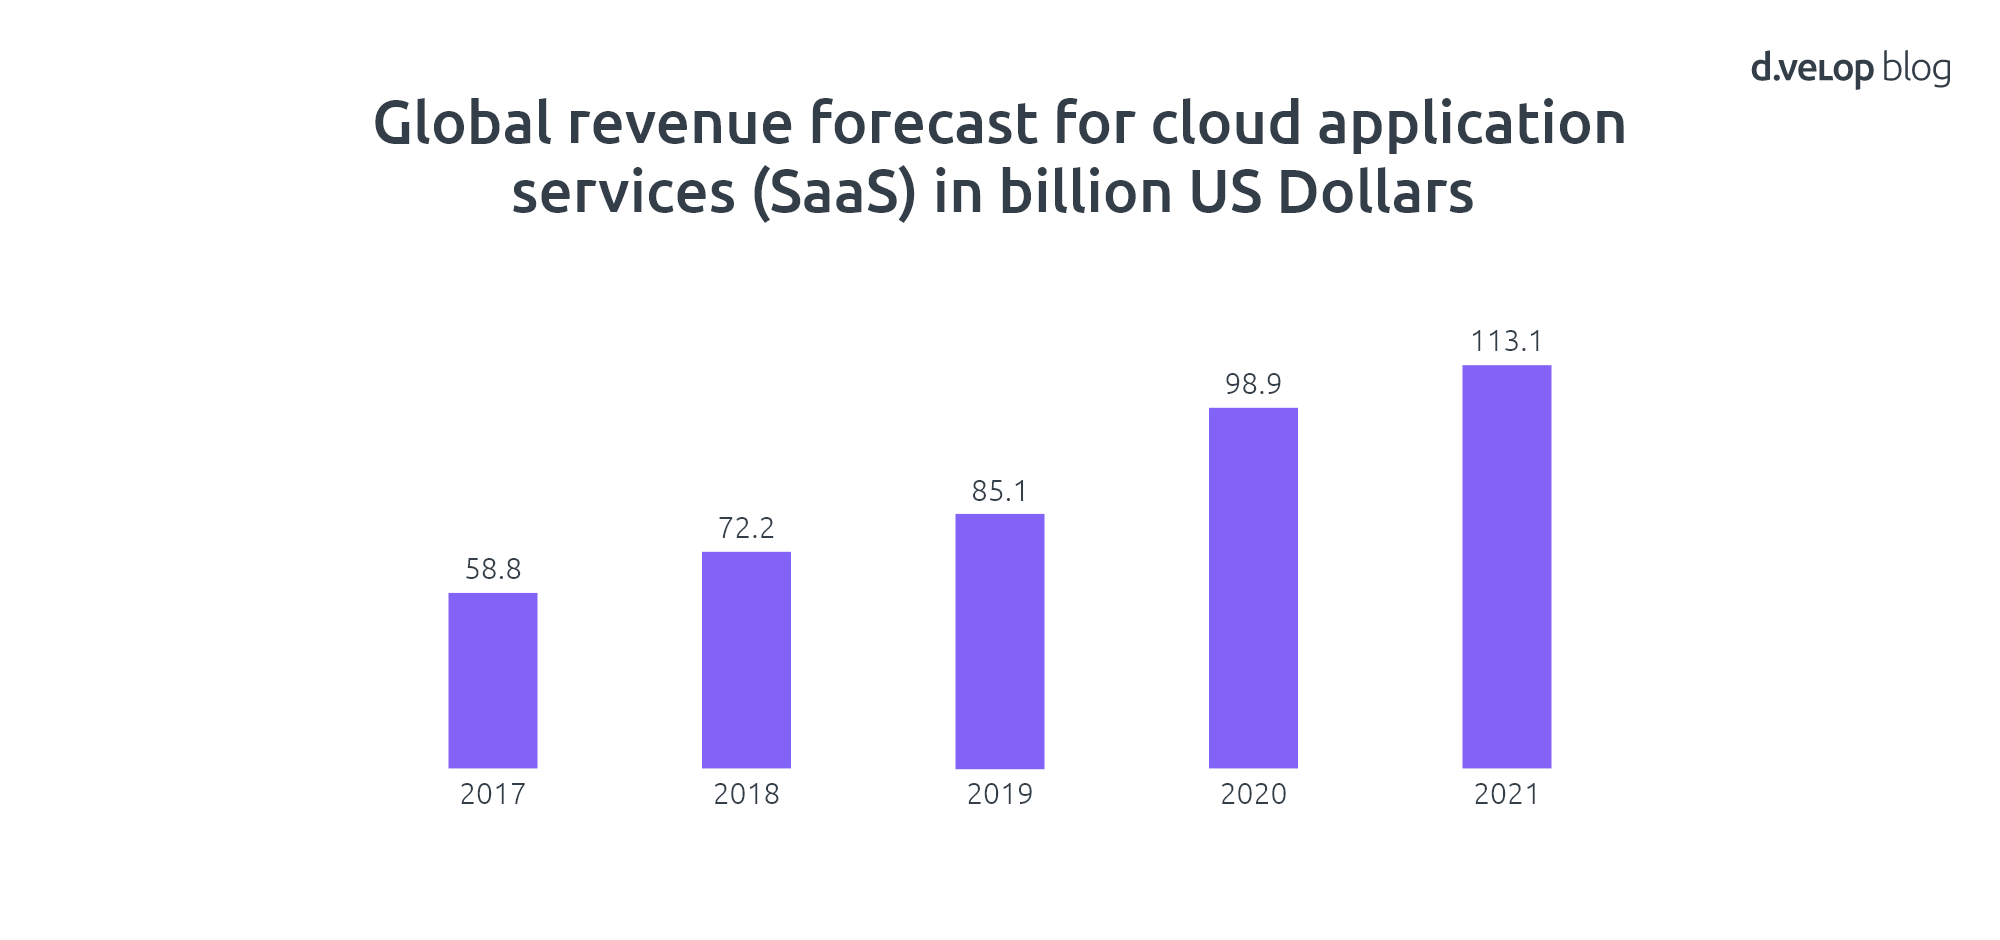 Global revenue forecast for cloud applications by Gartner